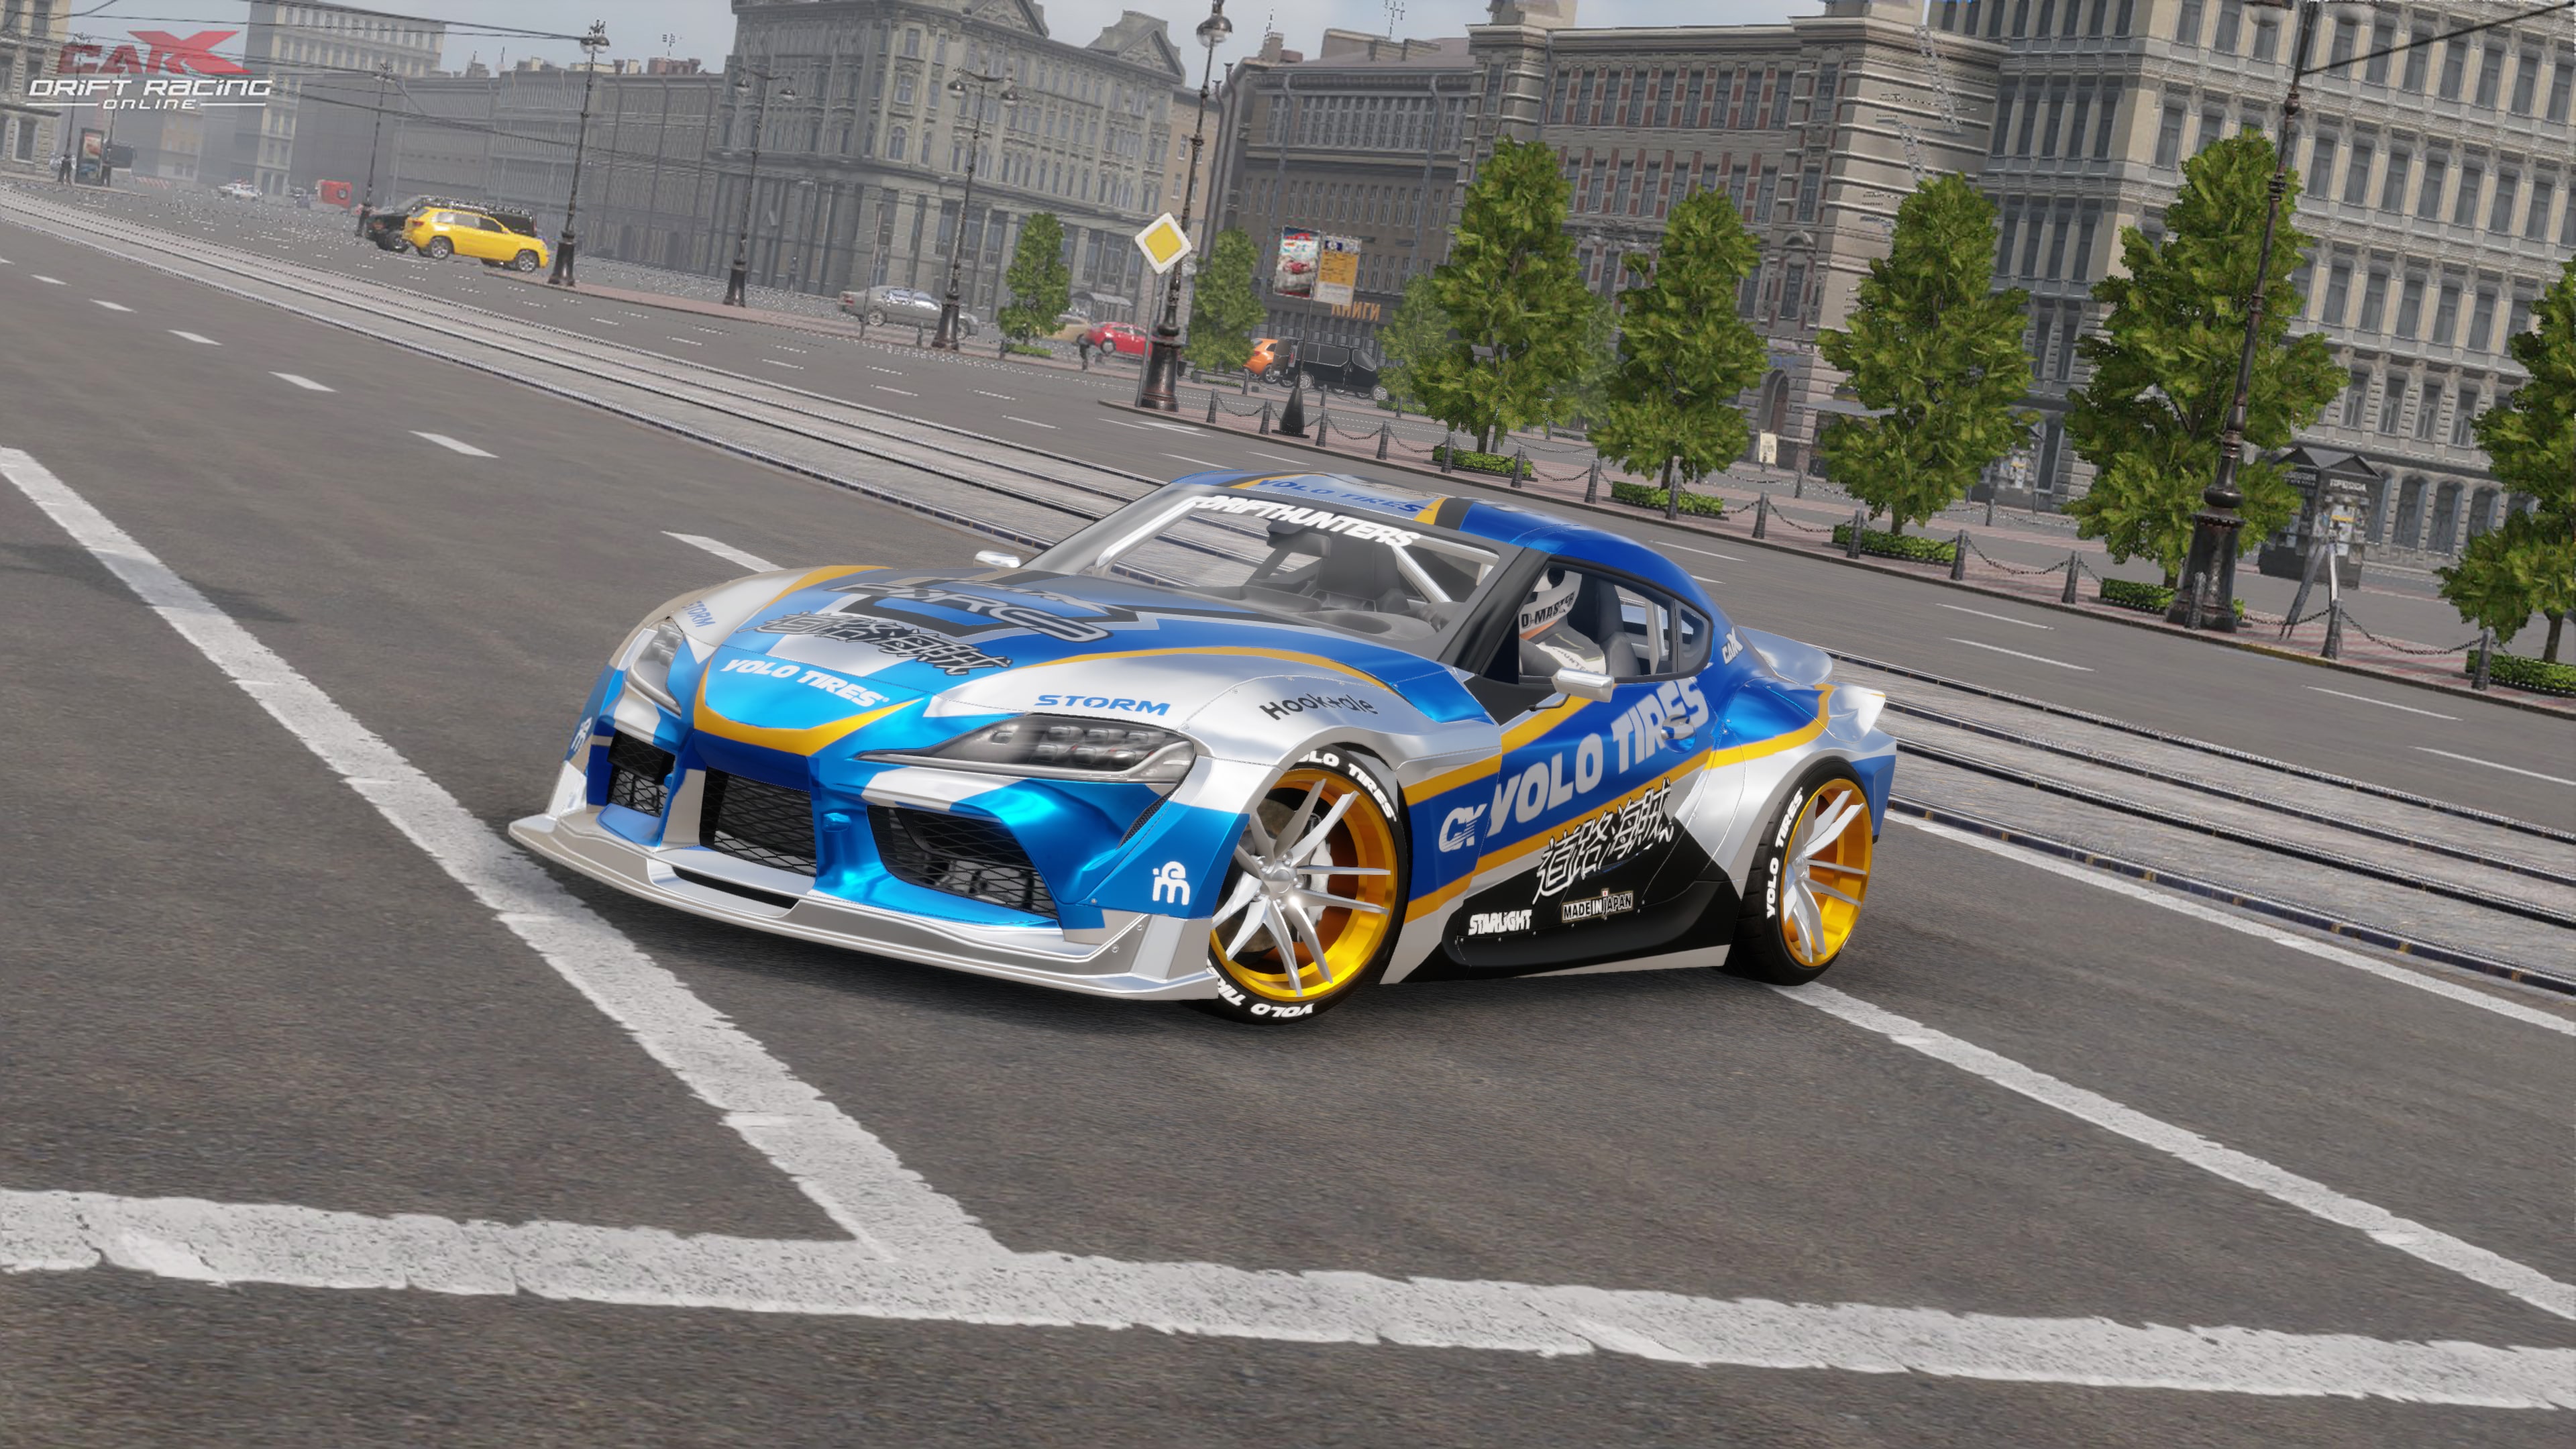 carX drift racing